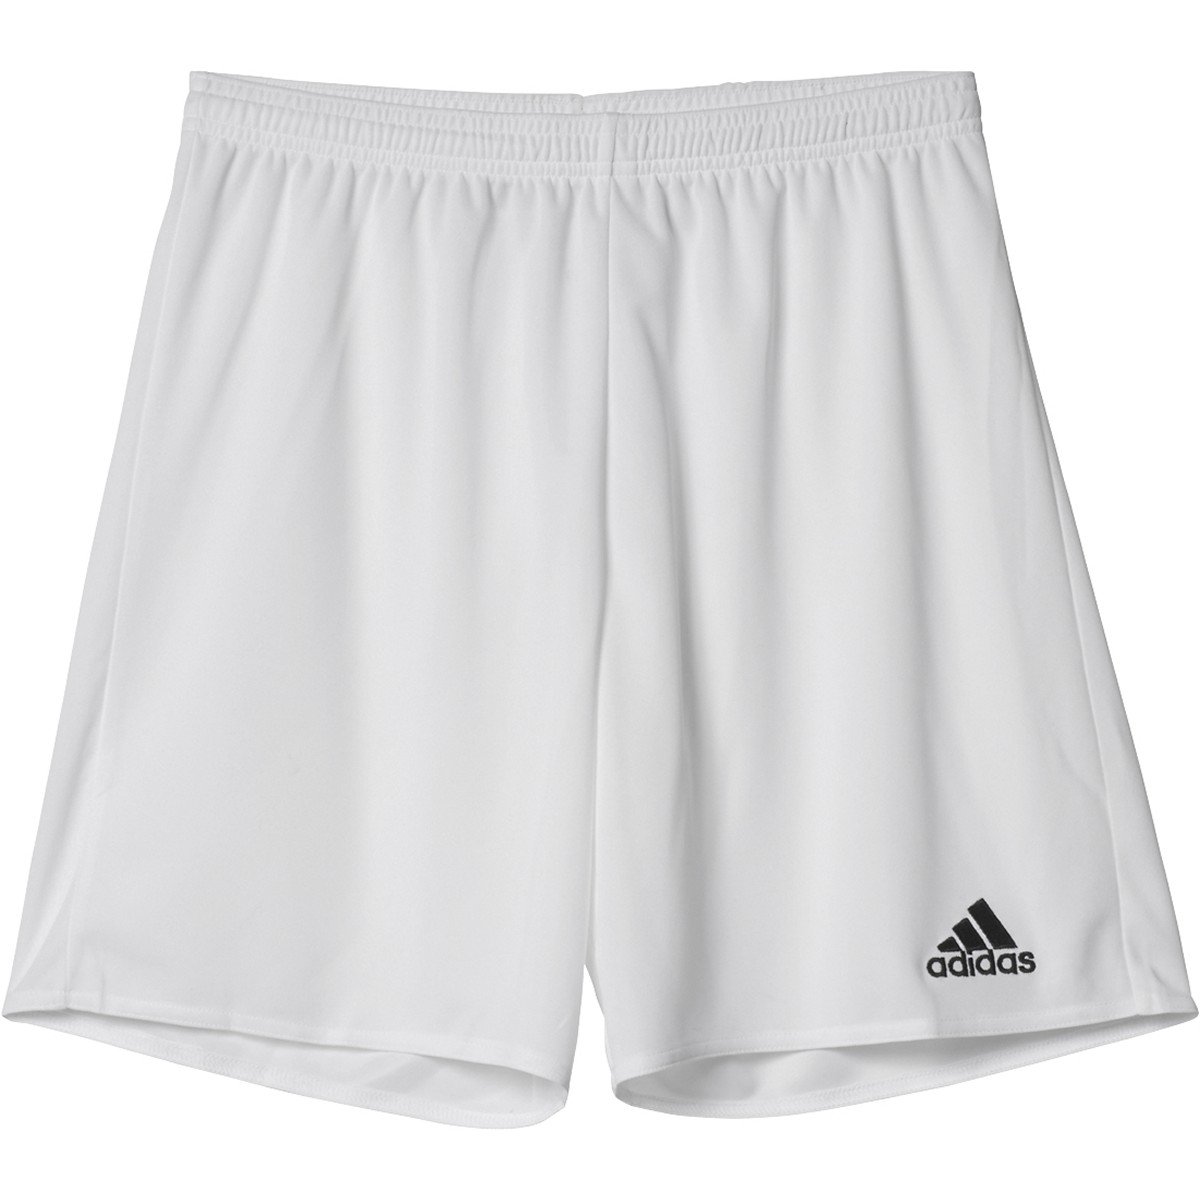 adidas Men's Parma 16 Short Team Shorts adidas White/Black X-Small 